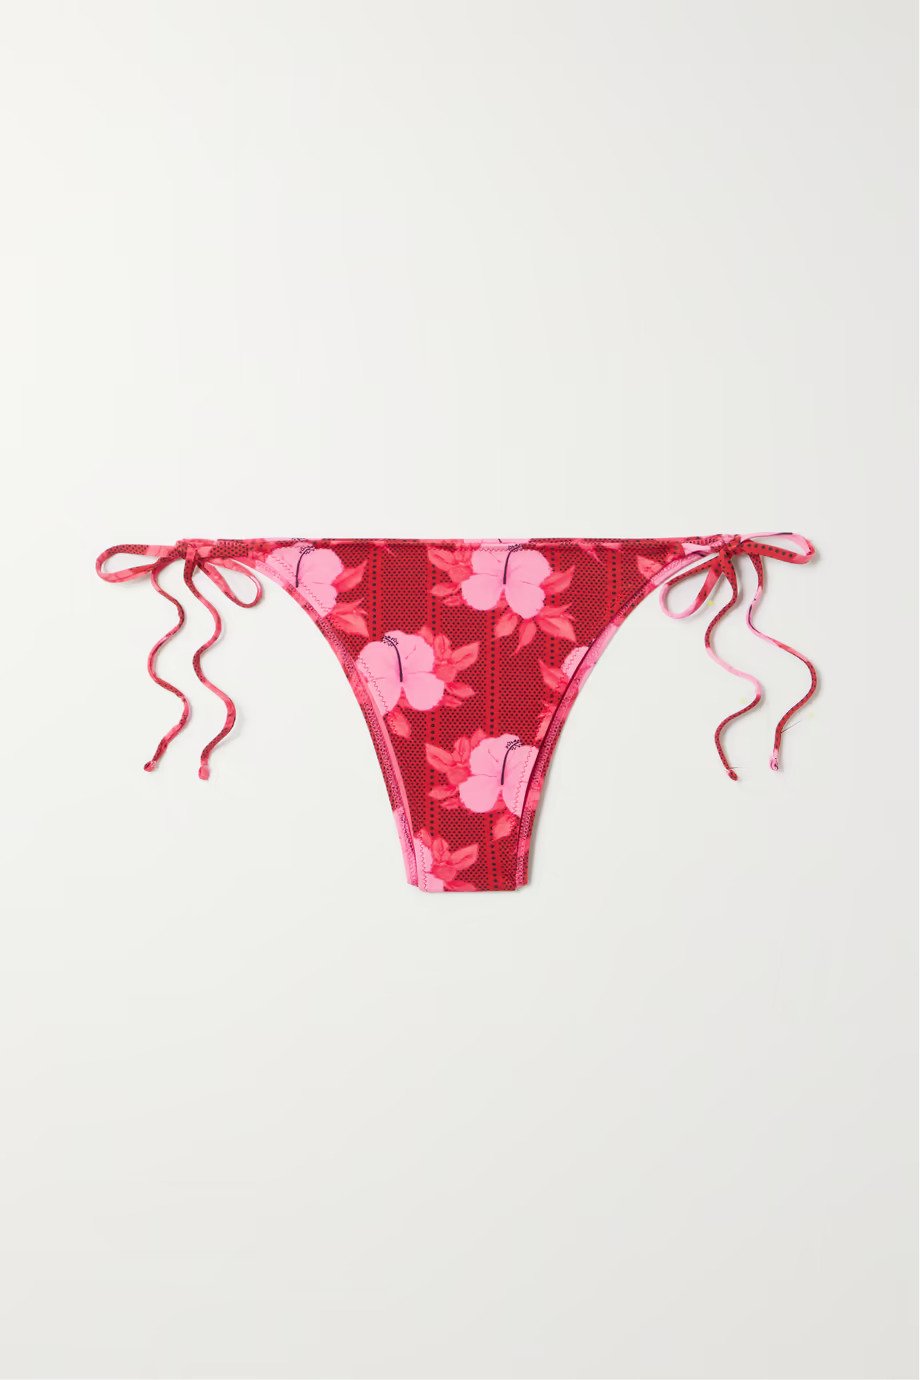 Fisch + Chanzy Floral-Print Stretch-ECONYL Bikini Briefs